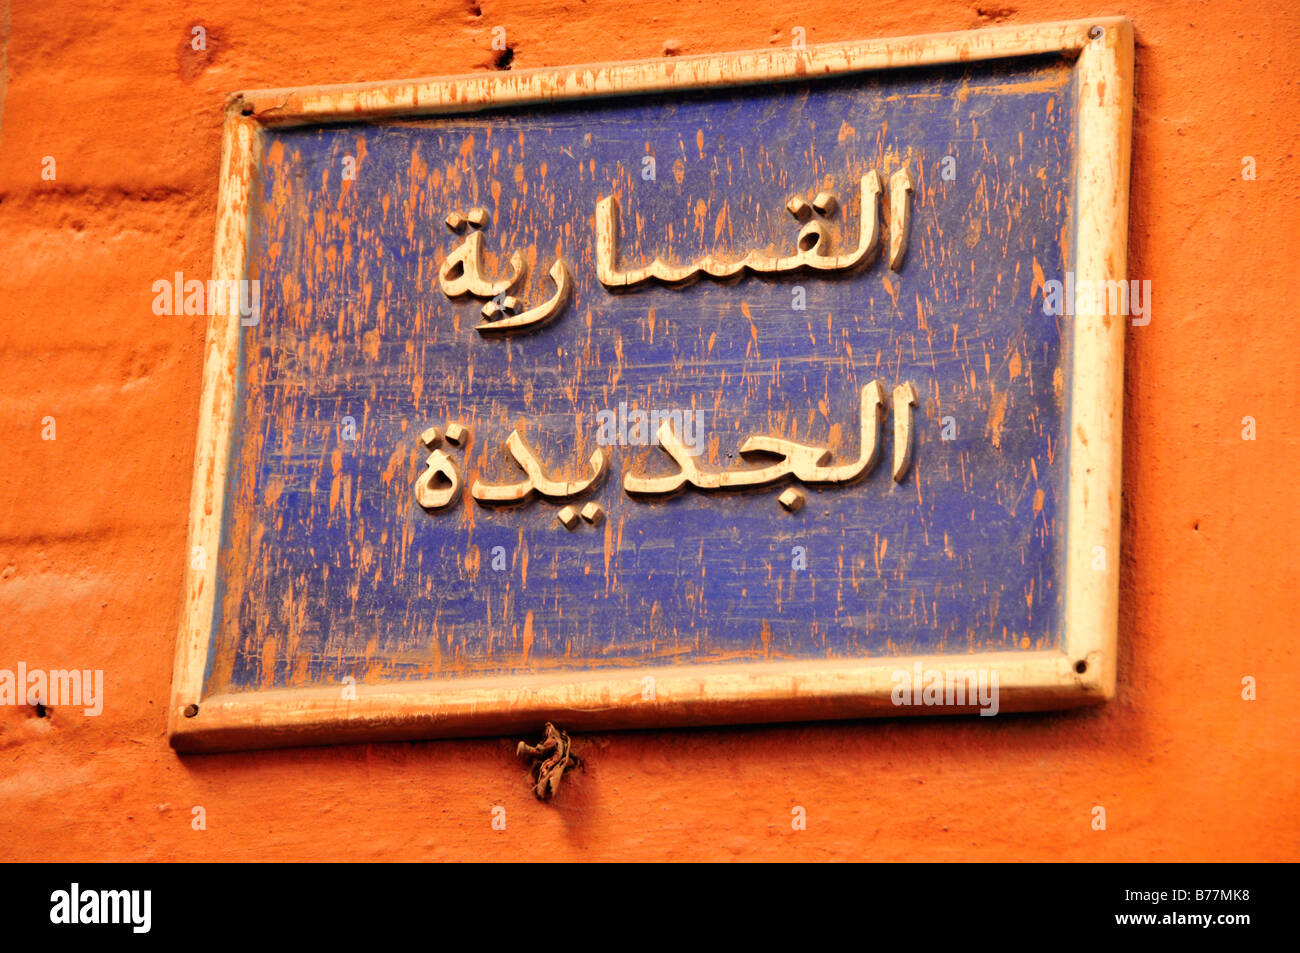 Street sign in Arabic, Marrekech, Morocco, Africa Stock Photo